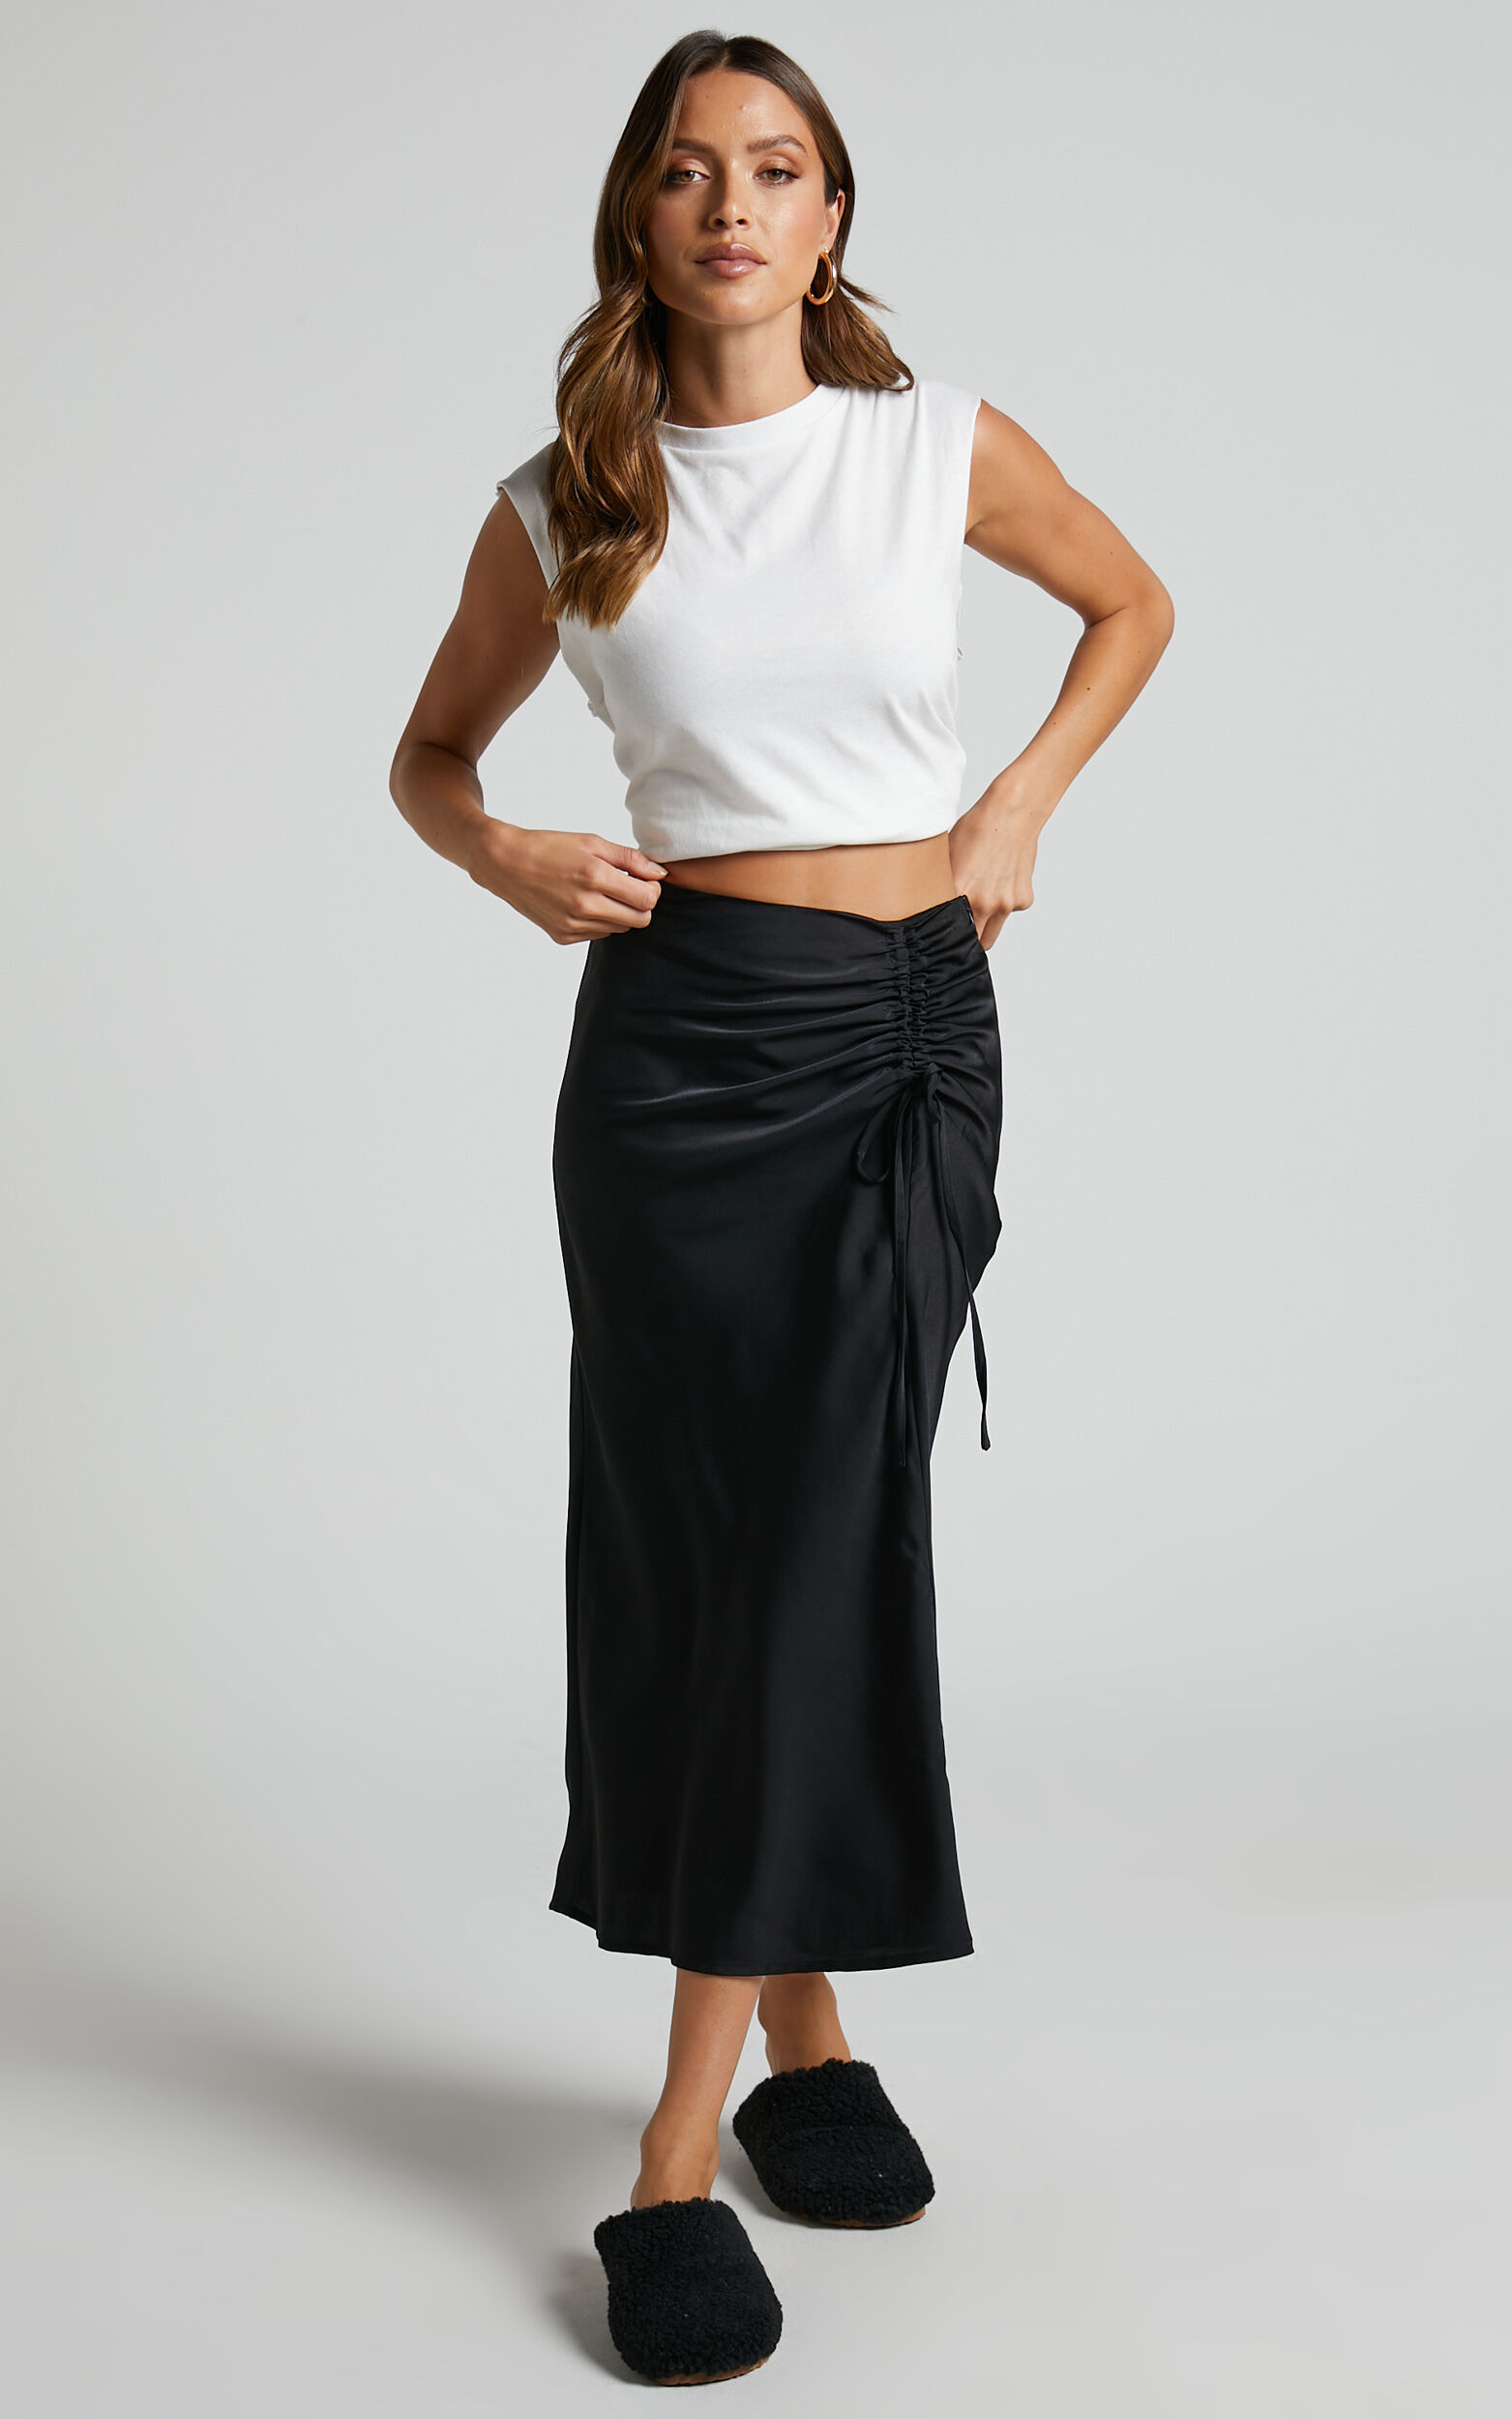 Zaylin Midaxi Skirt - Ruched Side Satin Slip Skirt in Black - 04, BLK3